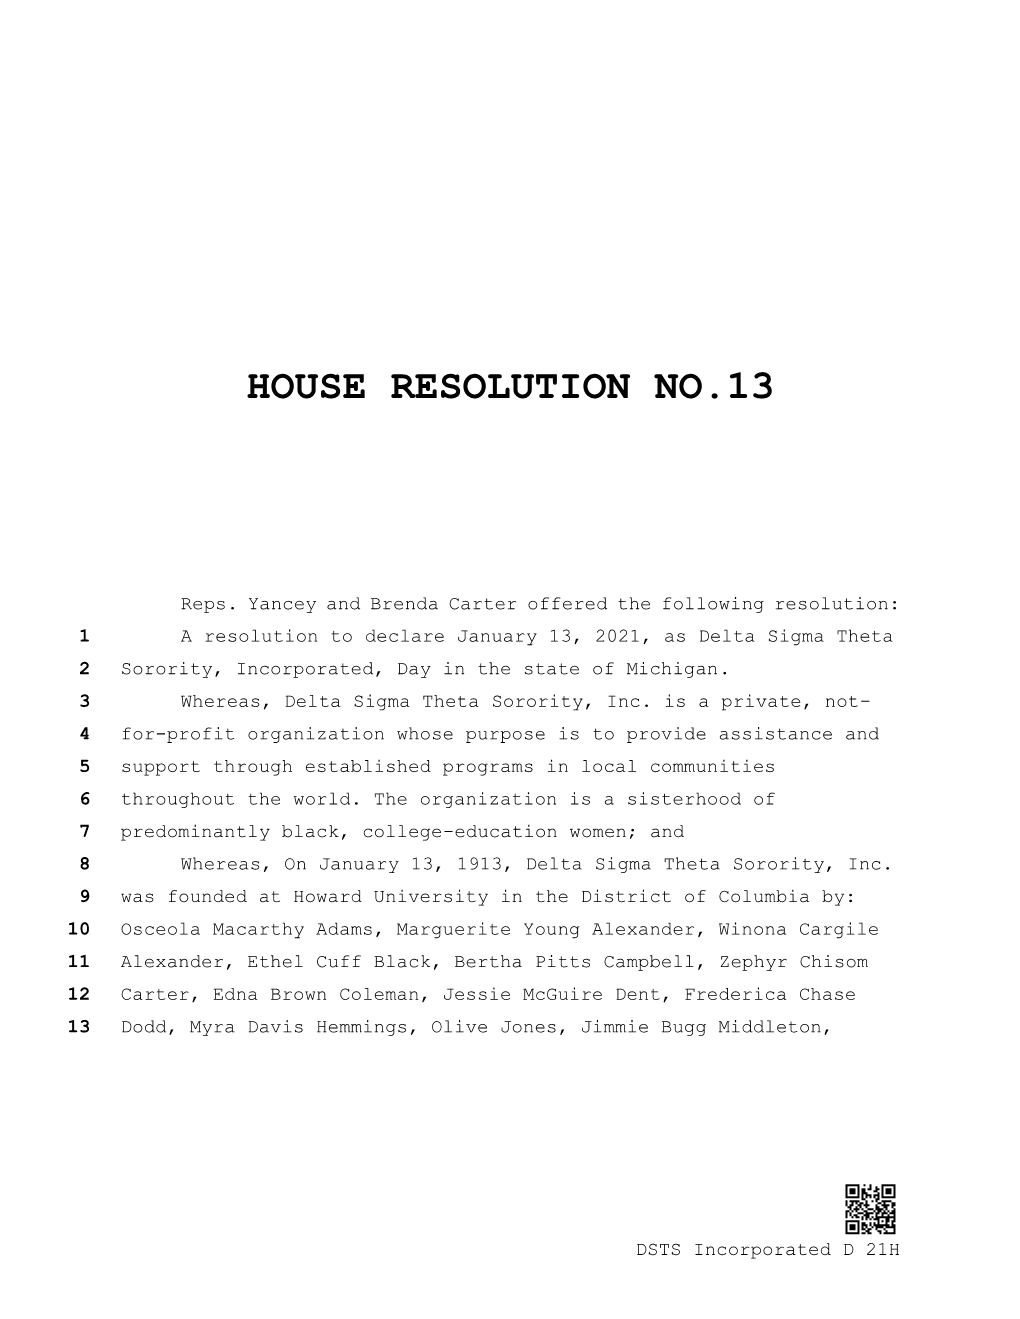 House Resolution No.13